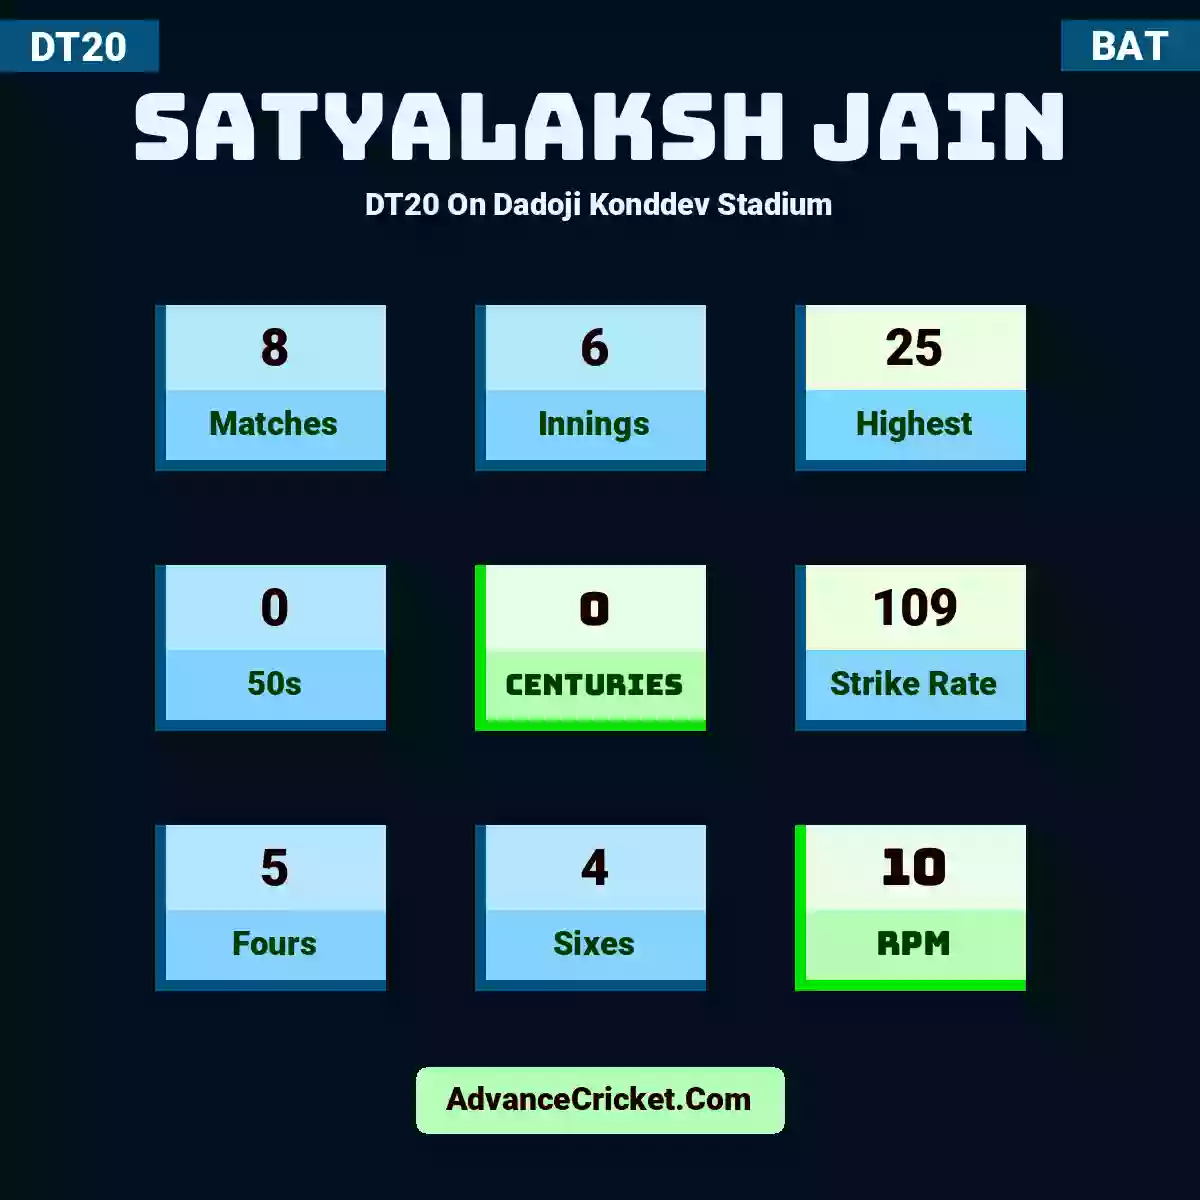 Satyalaksh Jain DT20  On Dadoji Konddev Stadium, Satyalaksh Jain played 8 matches, scored 25 runs as highest, 0 half-centuries, and 0 centuries, with a strike rate of 109. S.Jain hit 5 fours and 4 sixes, with an RPM of 10.